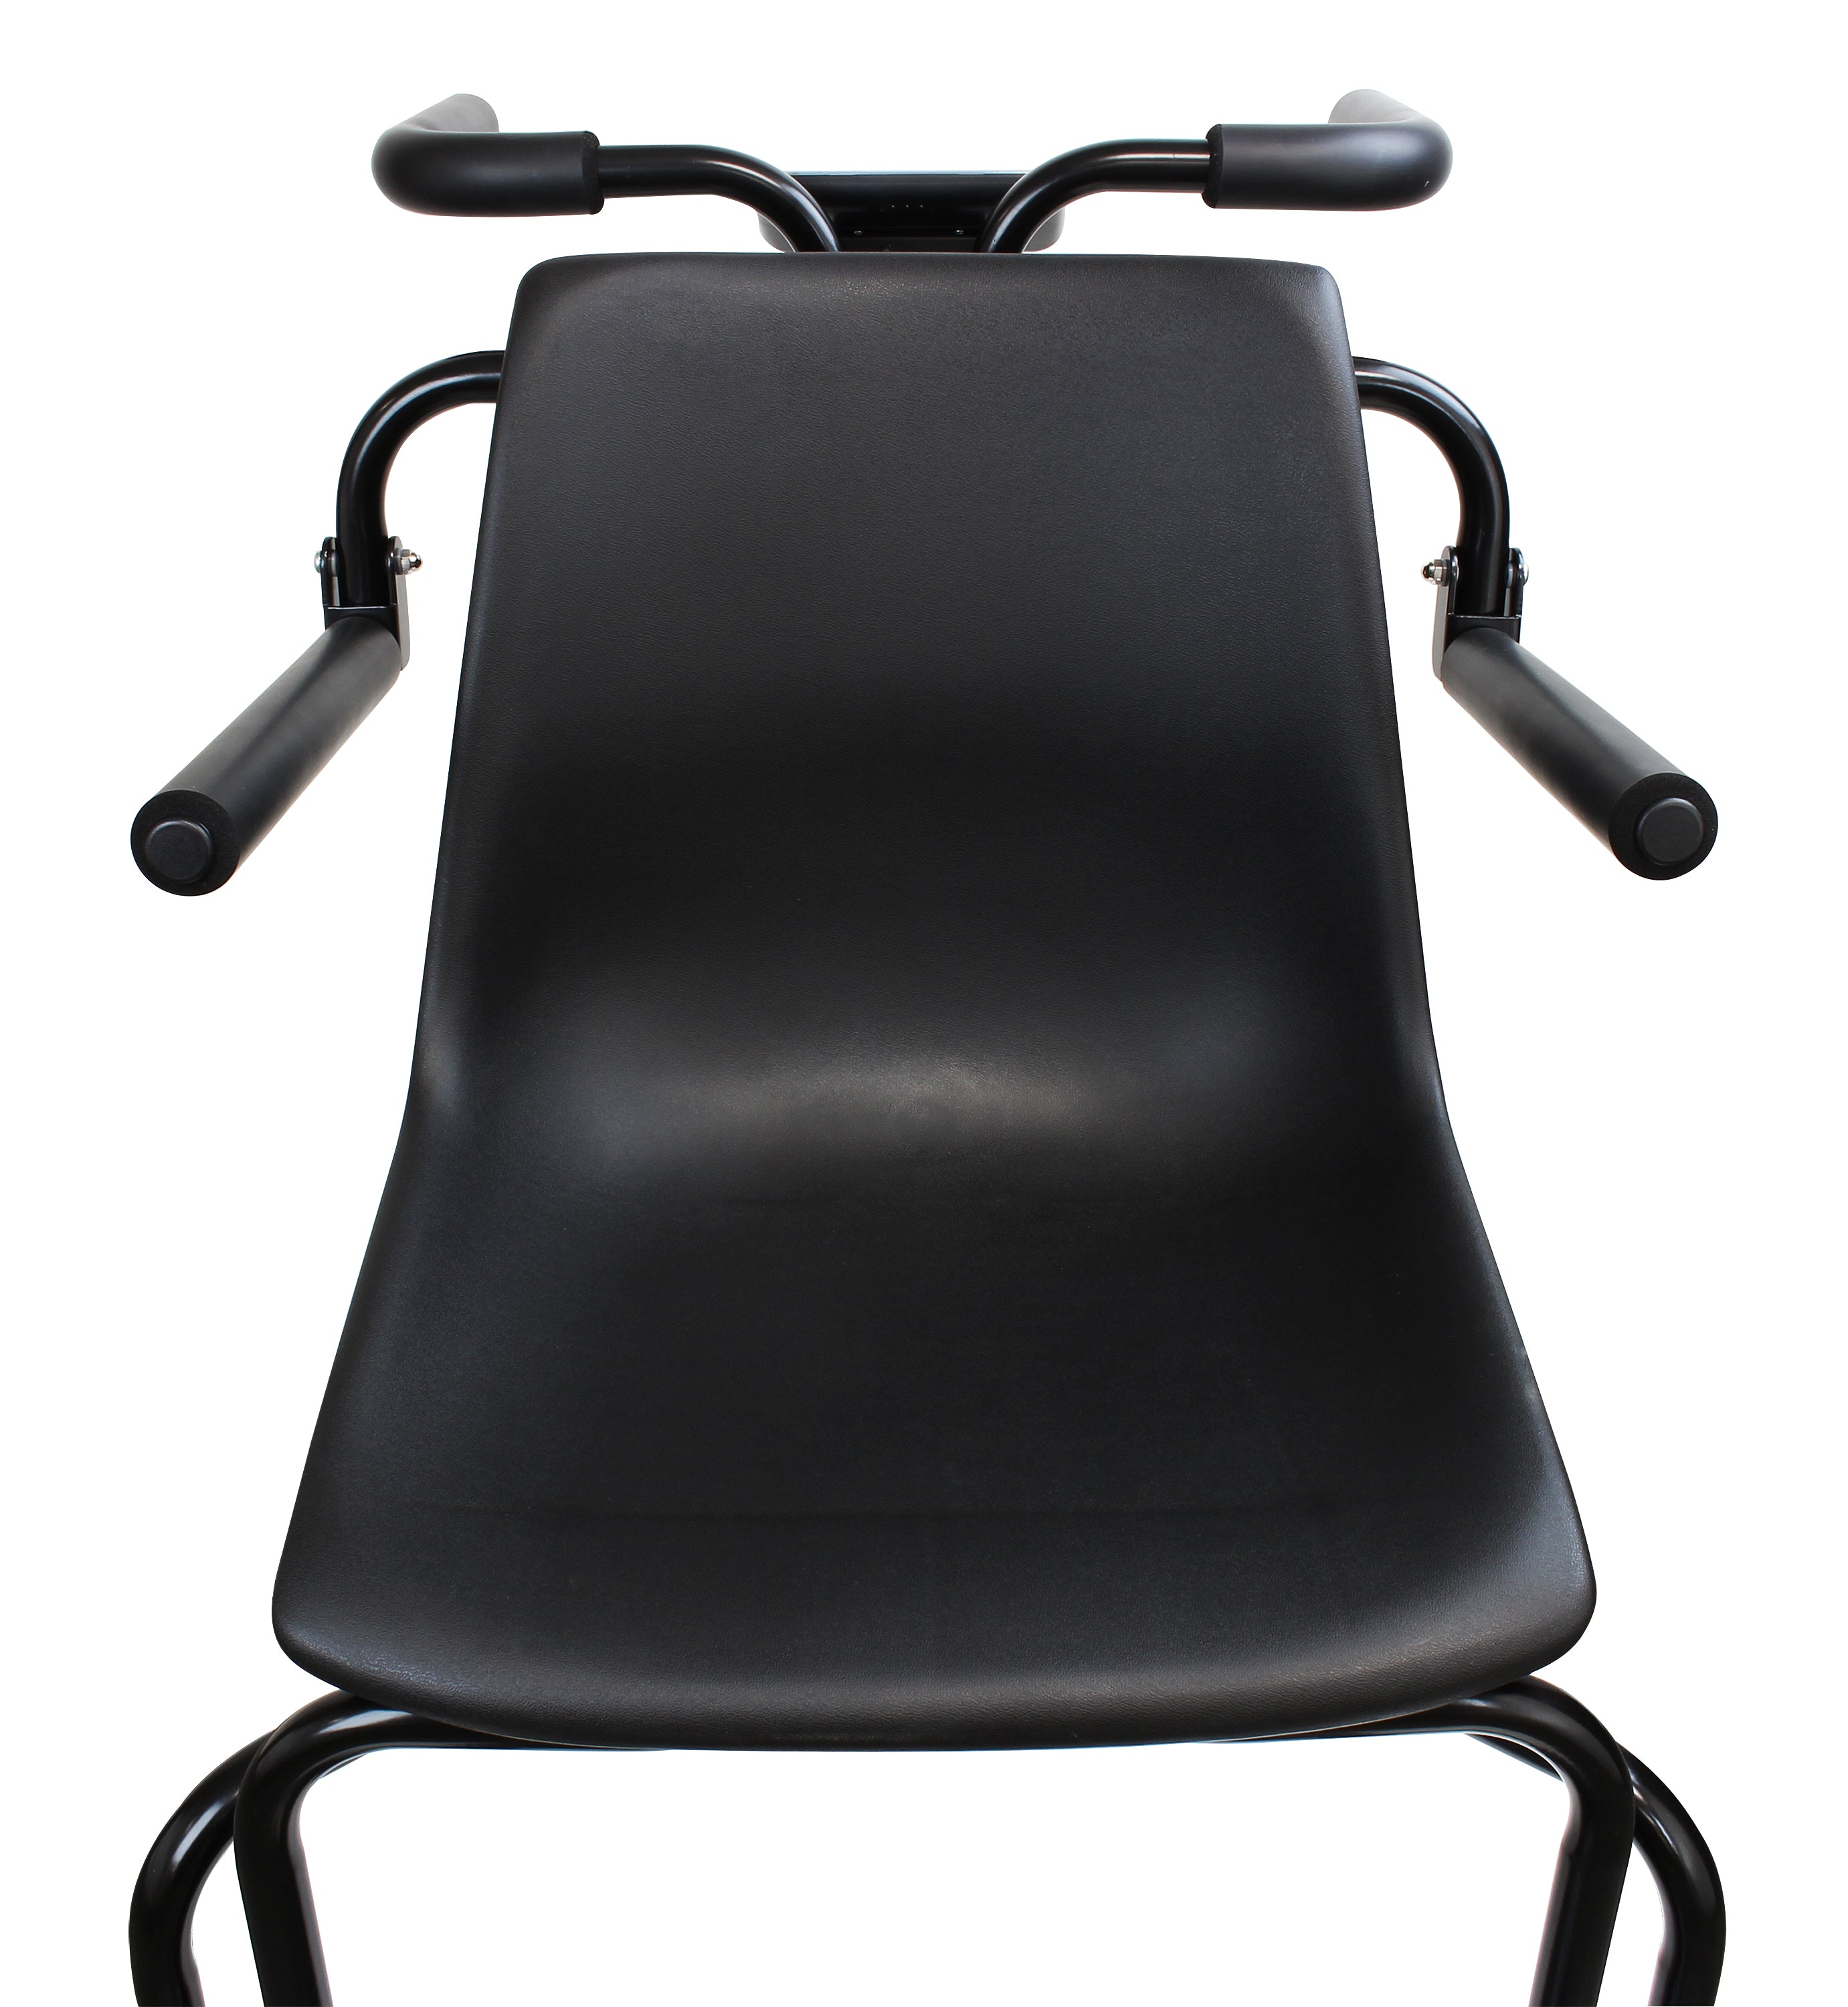 Detecto 6880 Chair Scale, Digital, 550 lb x .2 lb / 250 kg x .1 kg